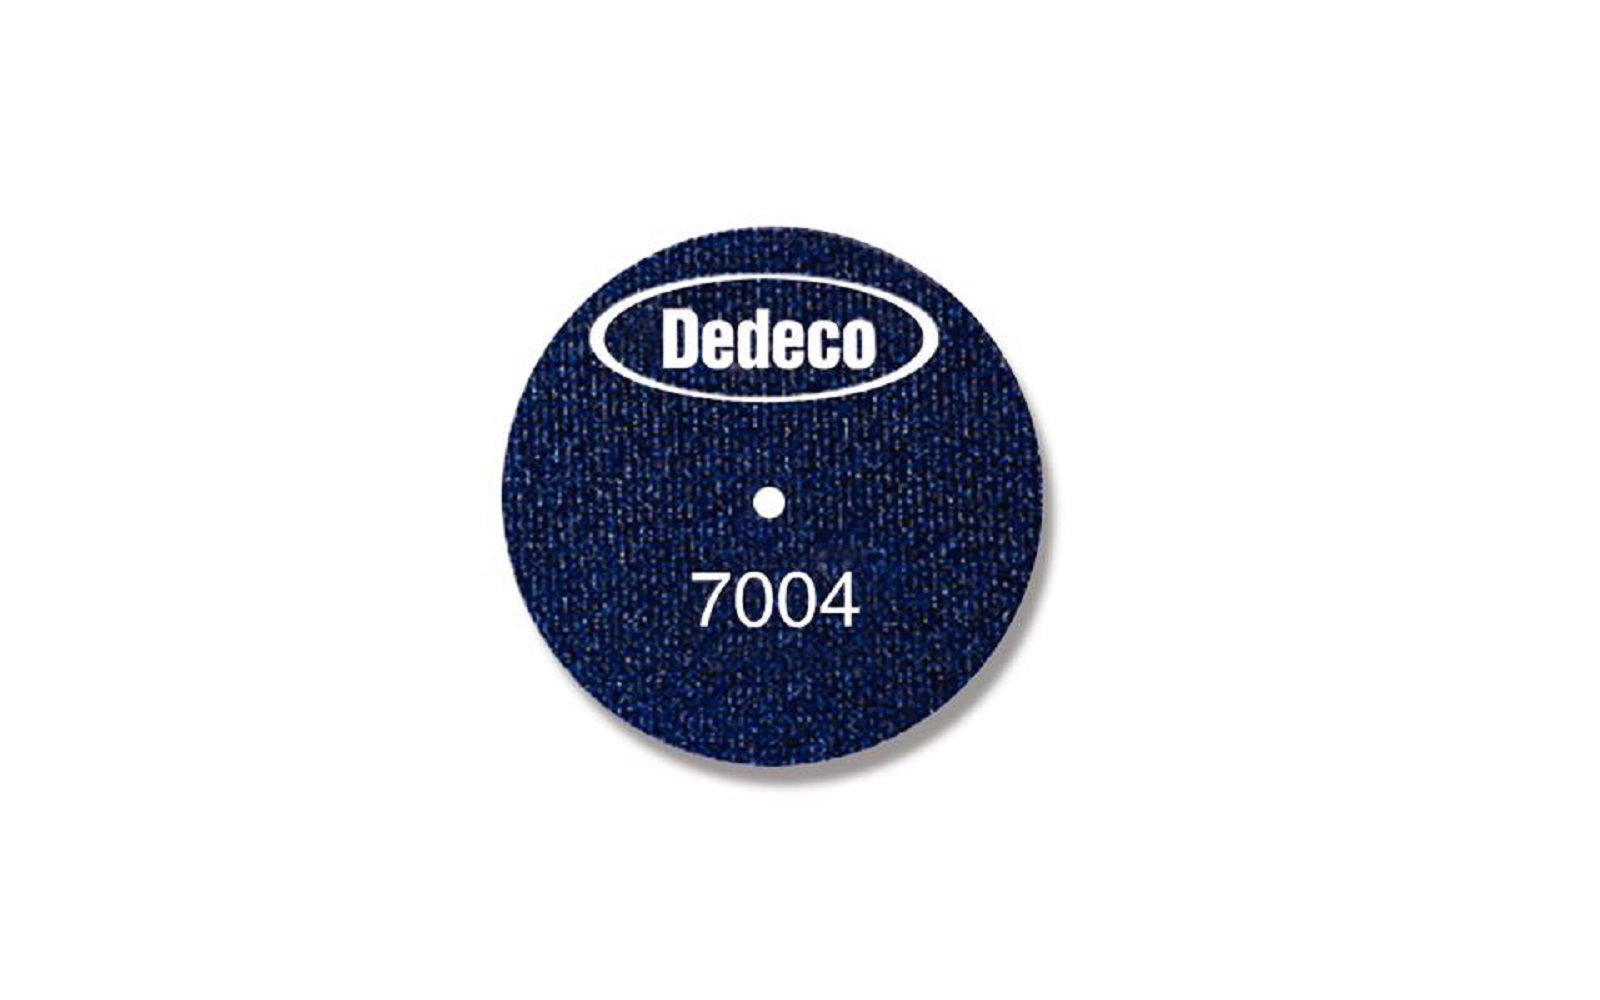 Traditional Fibre-Cut Disc - Dedeco International Inc